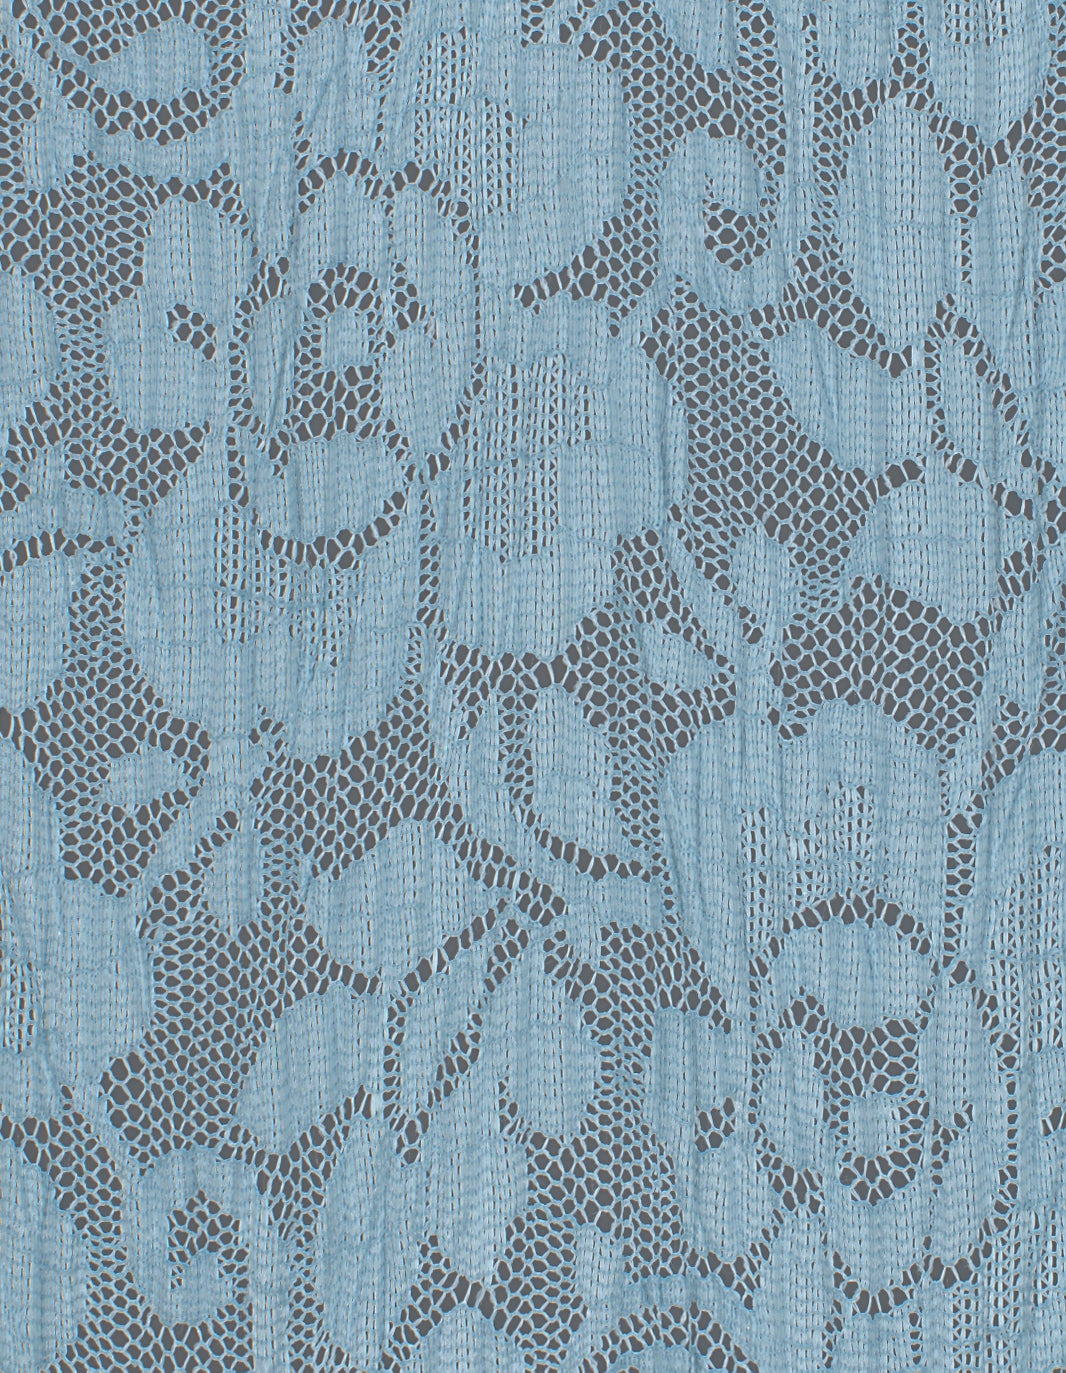 14005-03 Light Blue Pleat Floral Pattern Lace Plain Dyed Blend blend blue floral knit lace plain dyed pleat polyester spandex Lace, Pleat - knit fabric - woven fabric - fabric company - fabric wholesale - fabric b2b - fabric factory - high quality fabric - hong kong fabric - fabric hk - acetate fabric - cotton fabric - linen fabric - metallic fabric - nylon fabric - polyester fabric - spandex fabric - chun wing hing - cwh hk - fabric worldwide ship - 針織布 - 梳織布 - 布料公司- 布料批發 - 香港布料 - 秦榮興